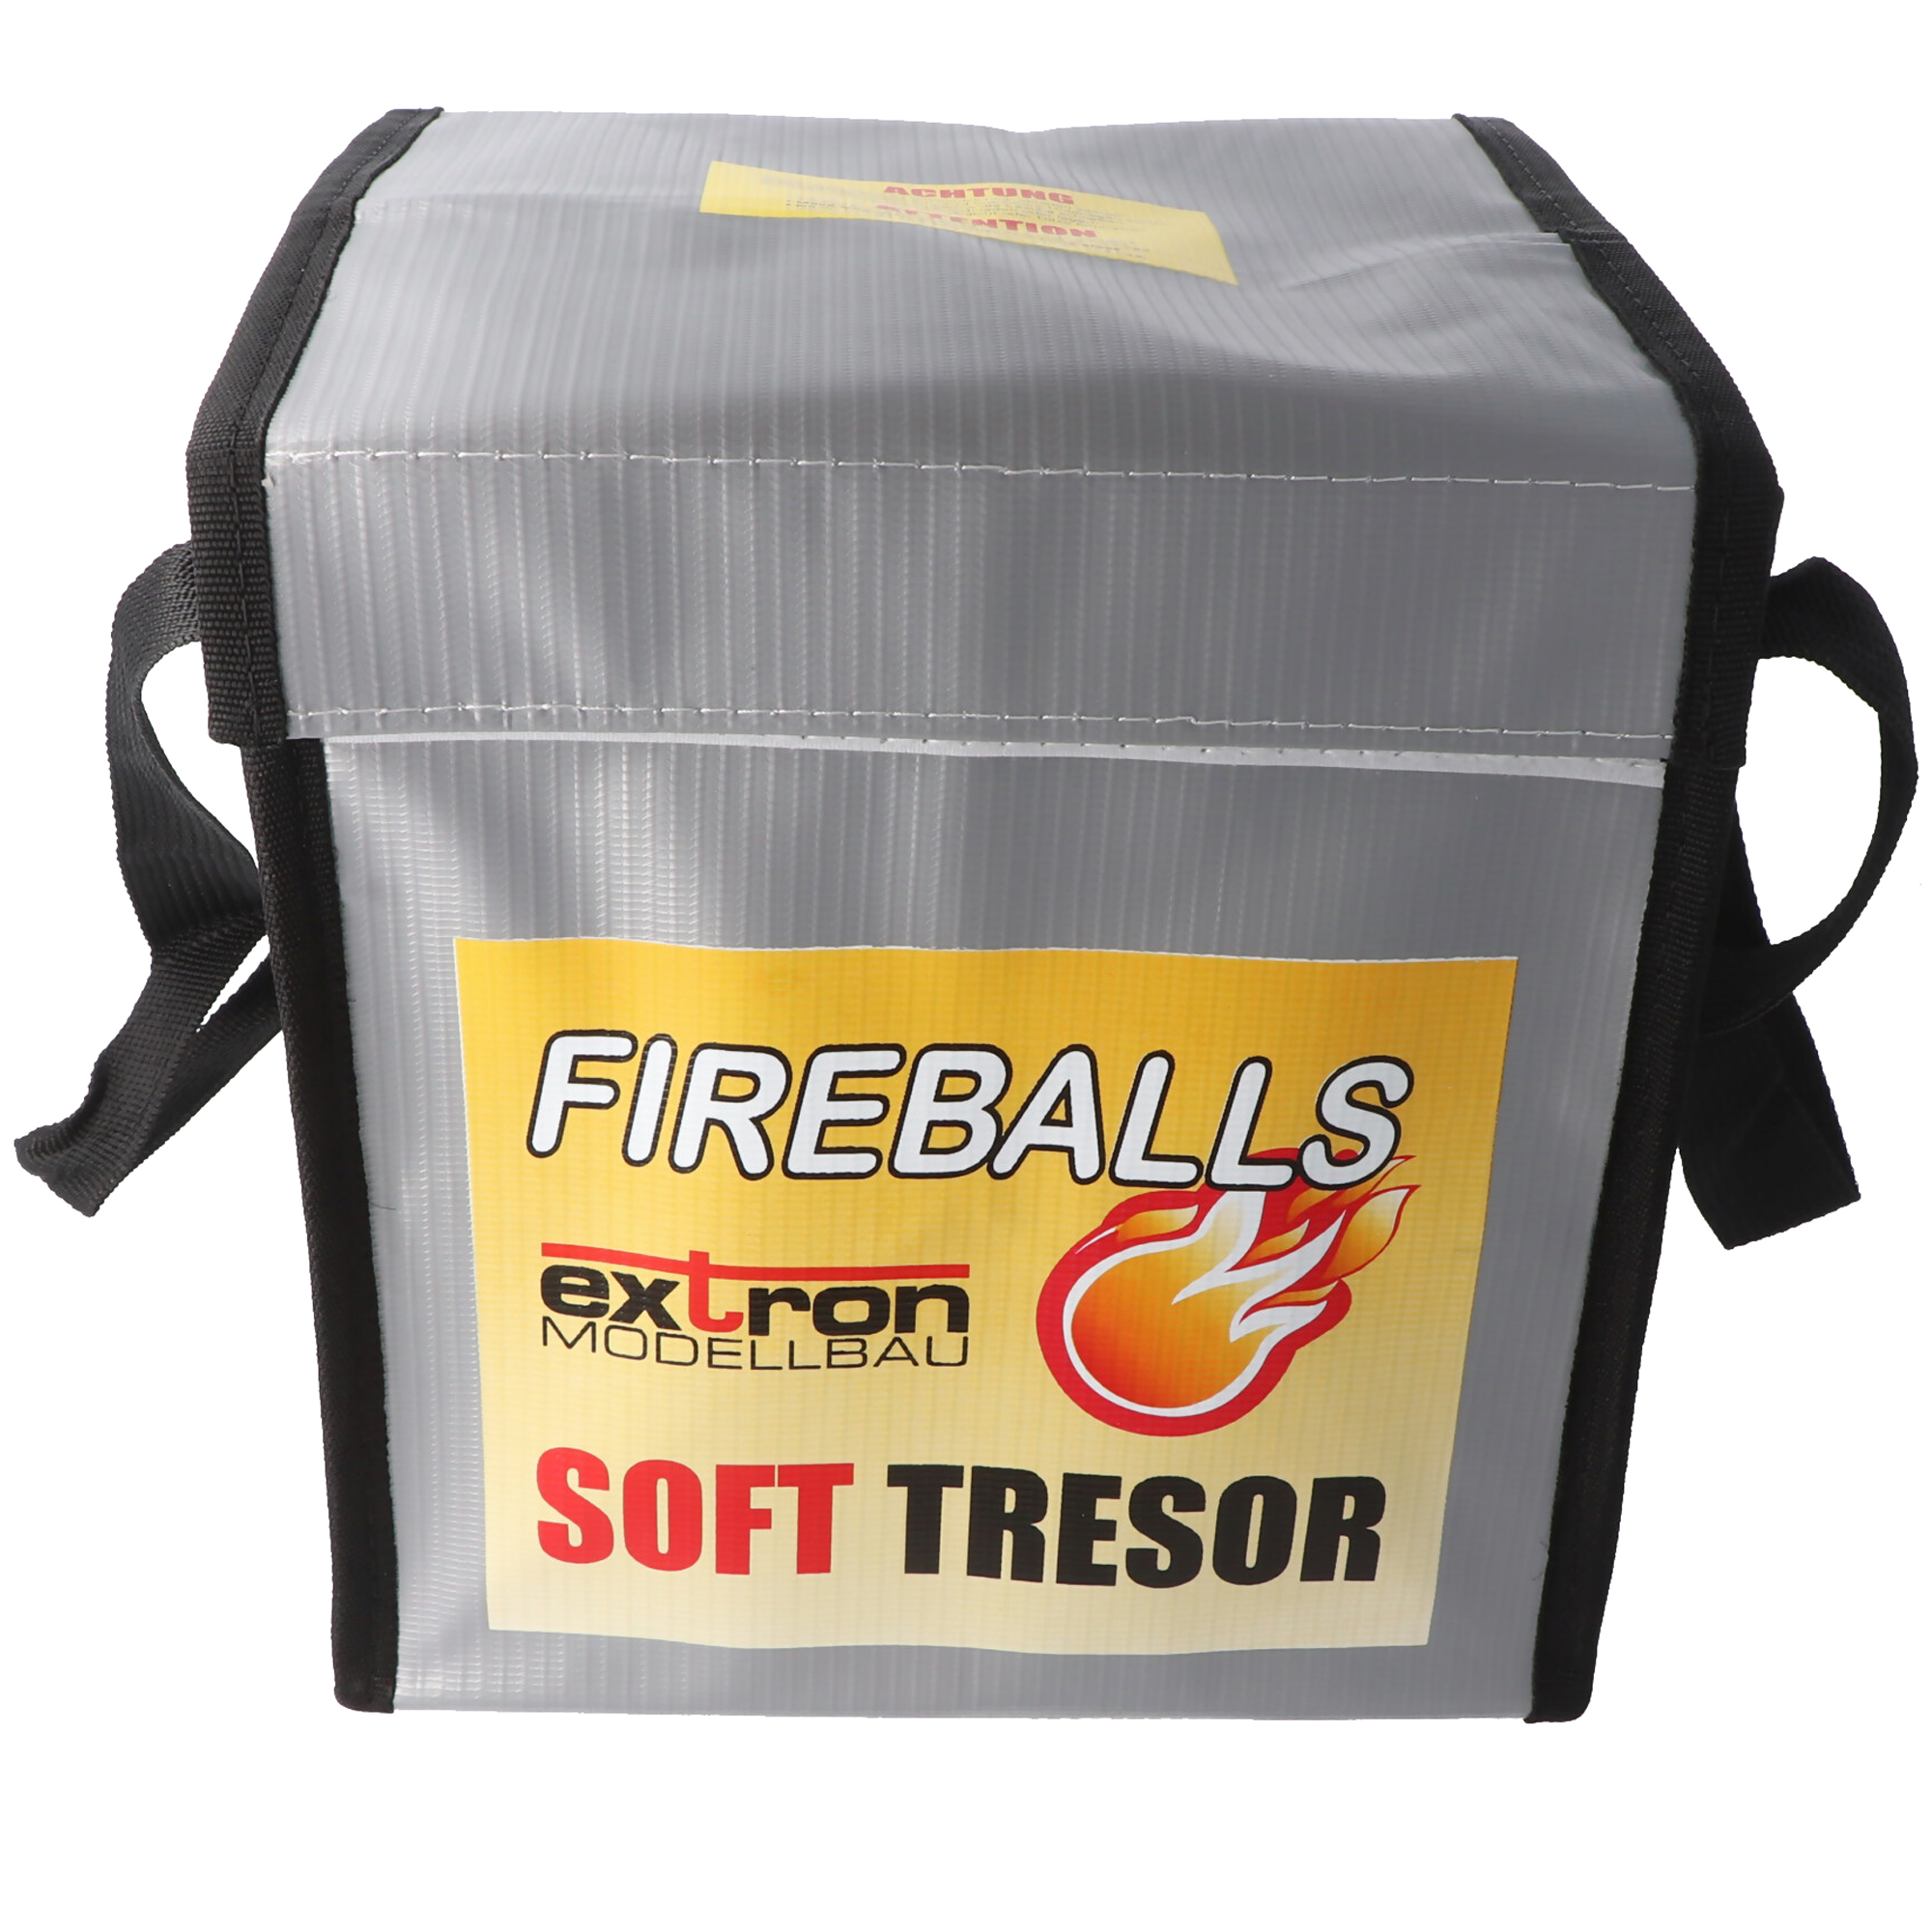 Fireballs Feuerlöschgranulat Tresor Bundle für Lithium Akkus, Brandschutz, Löschmittel 3x1 Liter inkl. Soft-Tresor